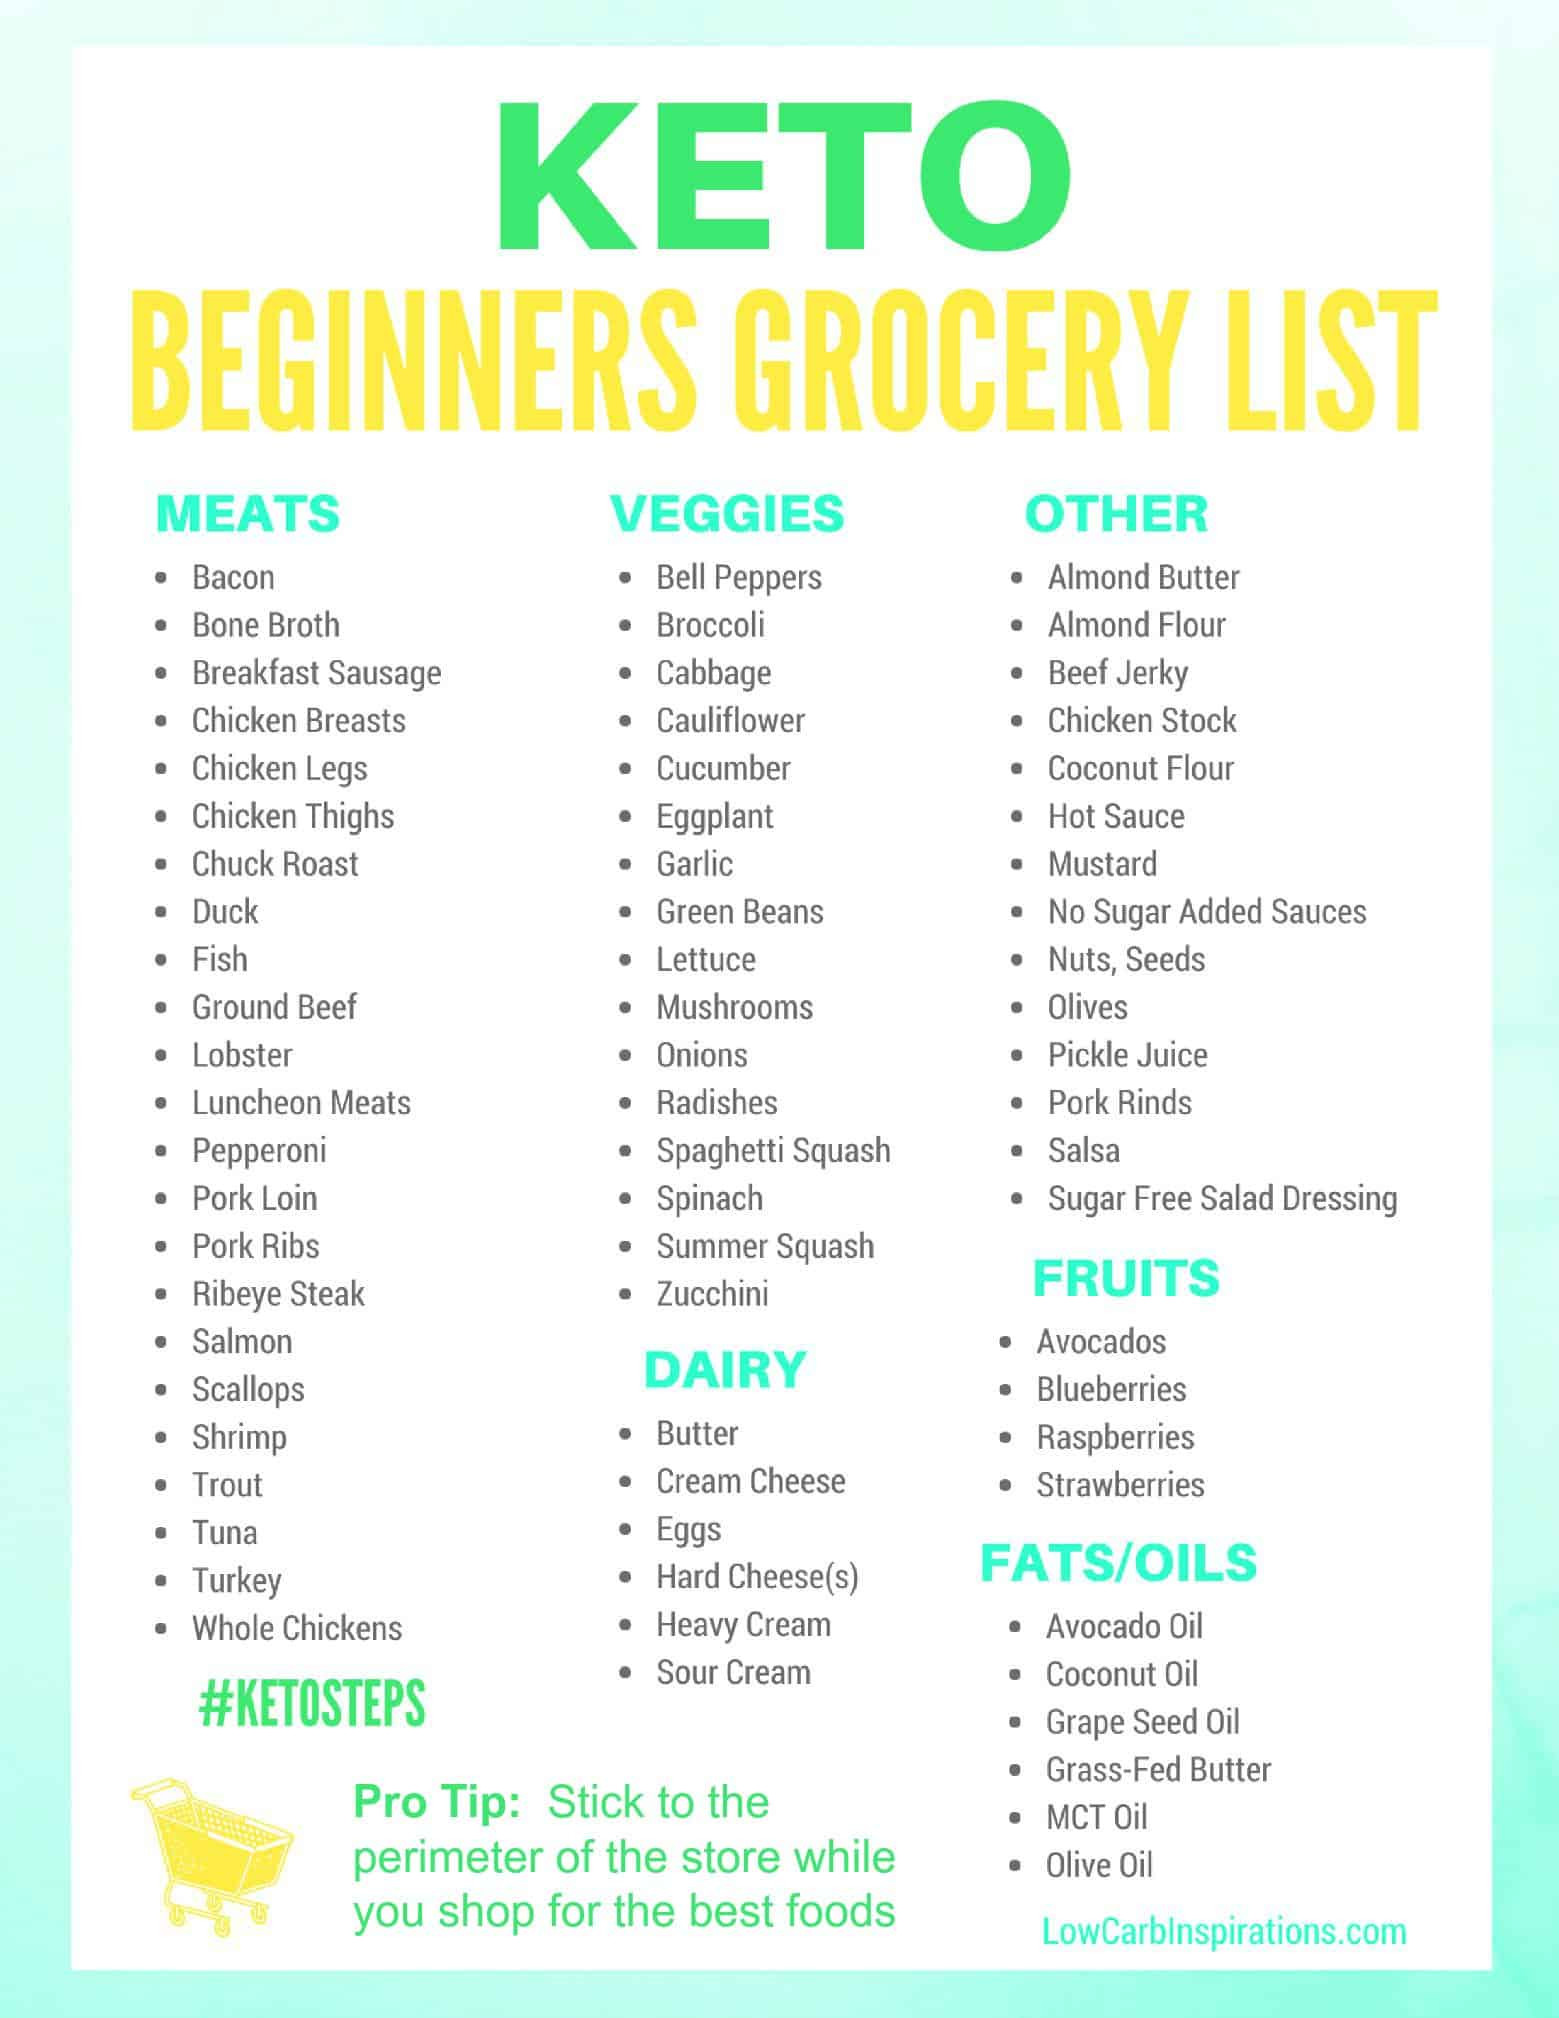 Keto Diet For Beginners Keto Diet For Beginners Week 1 Meal Plan
 Keto Grocery List for Beginners iSaveA2Z